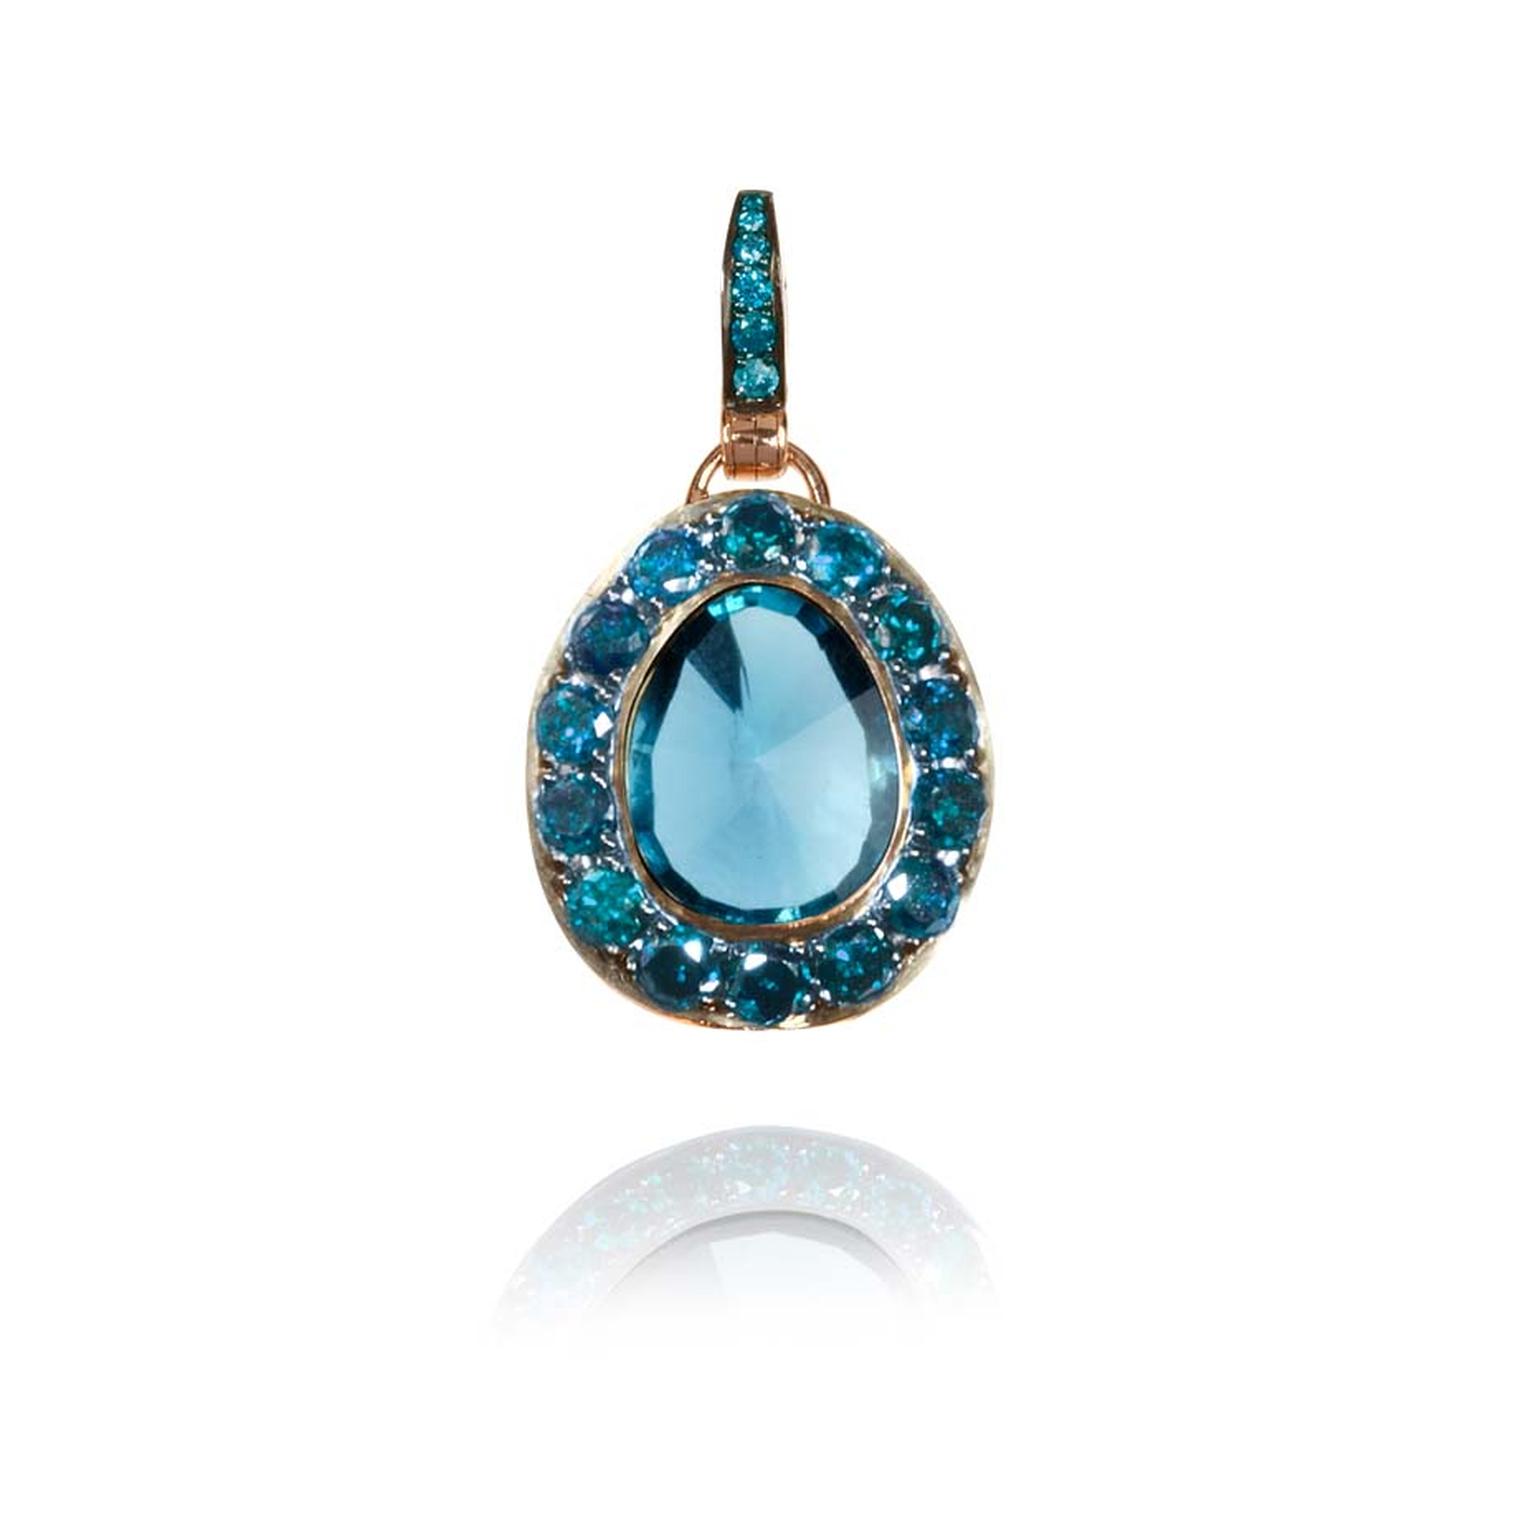 Dusty Diamonds rose gold pendant with blue diamonds and a centre London blue topaz.